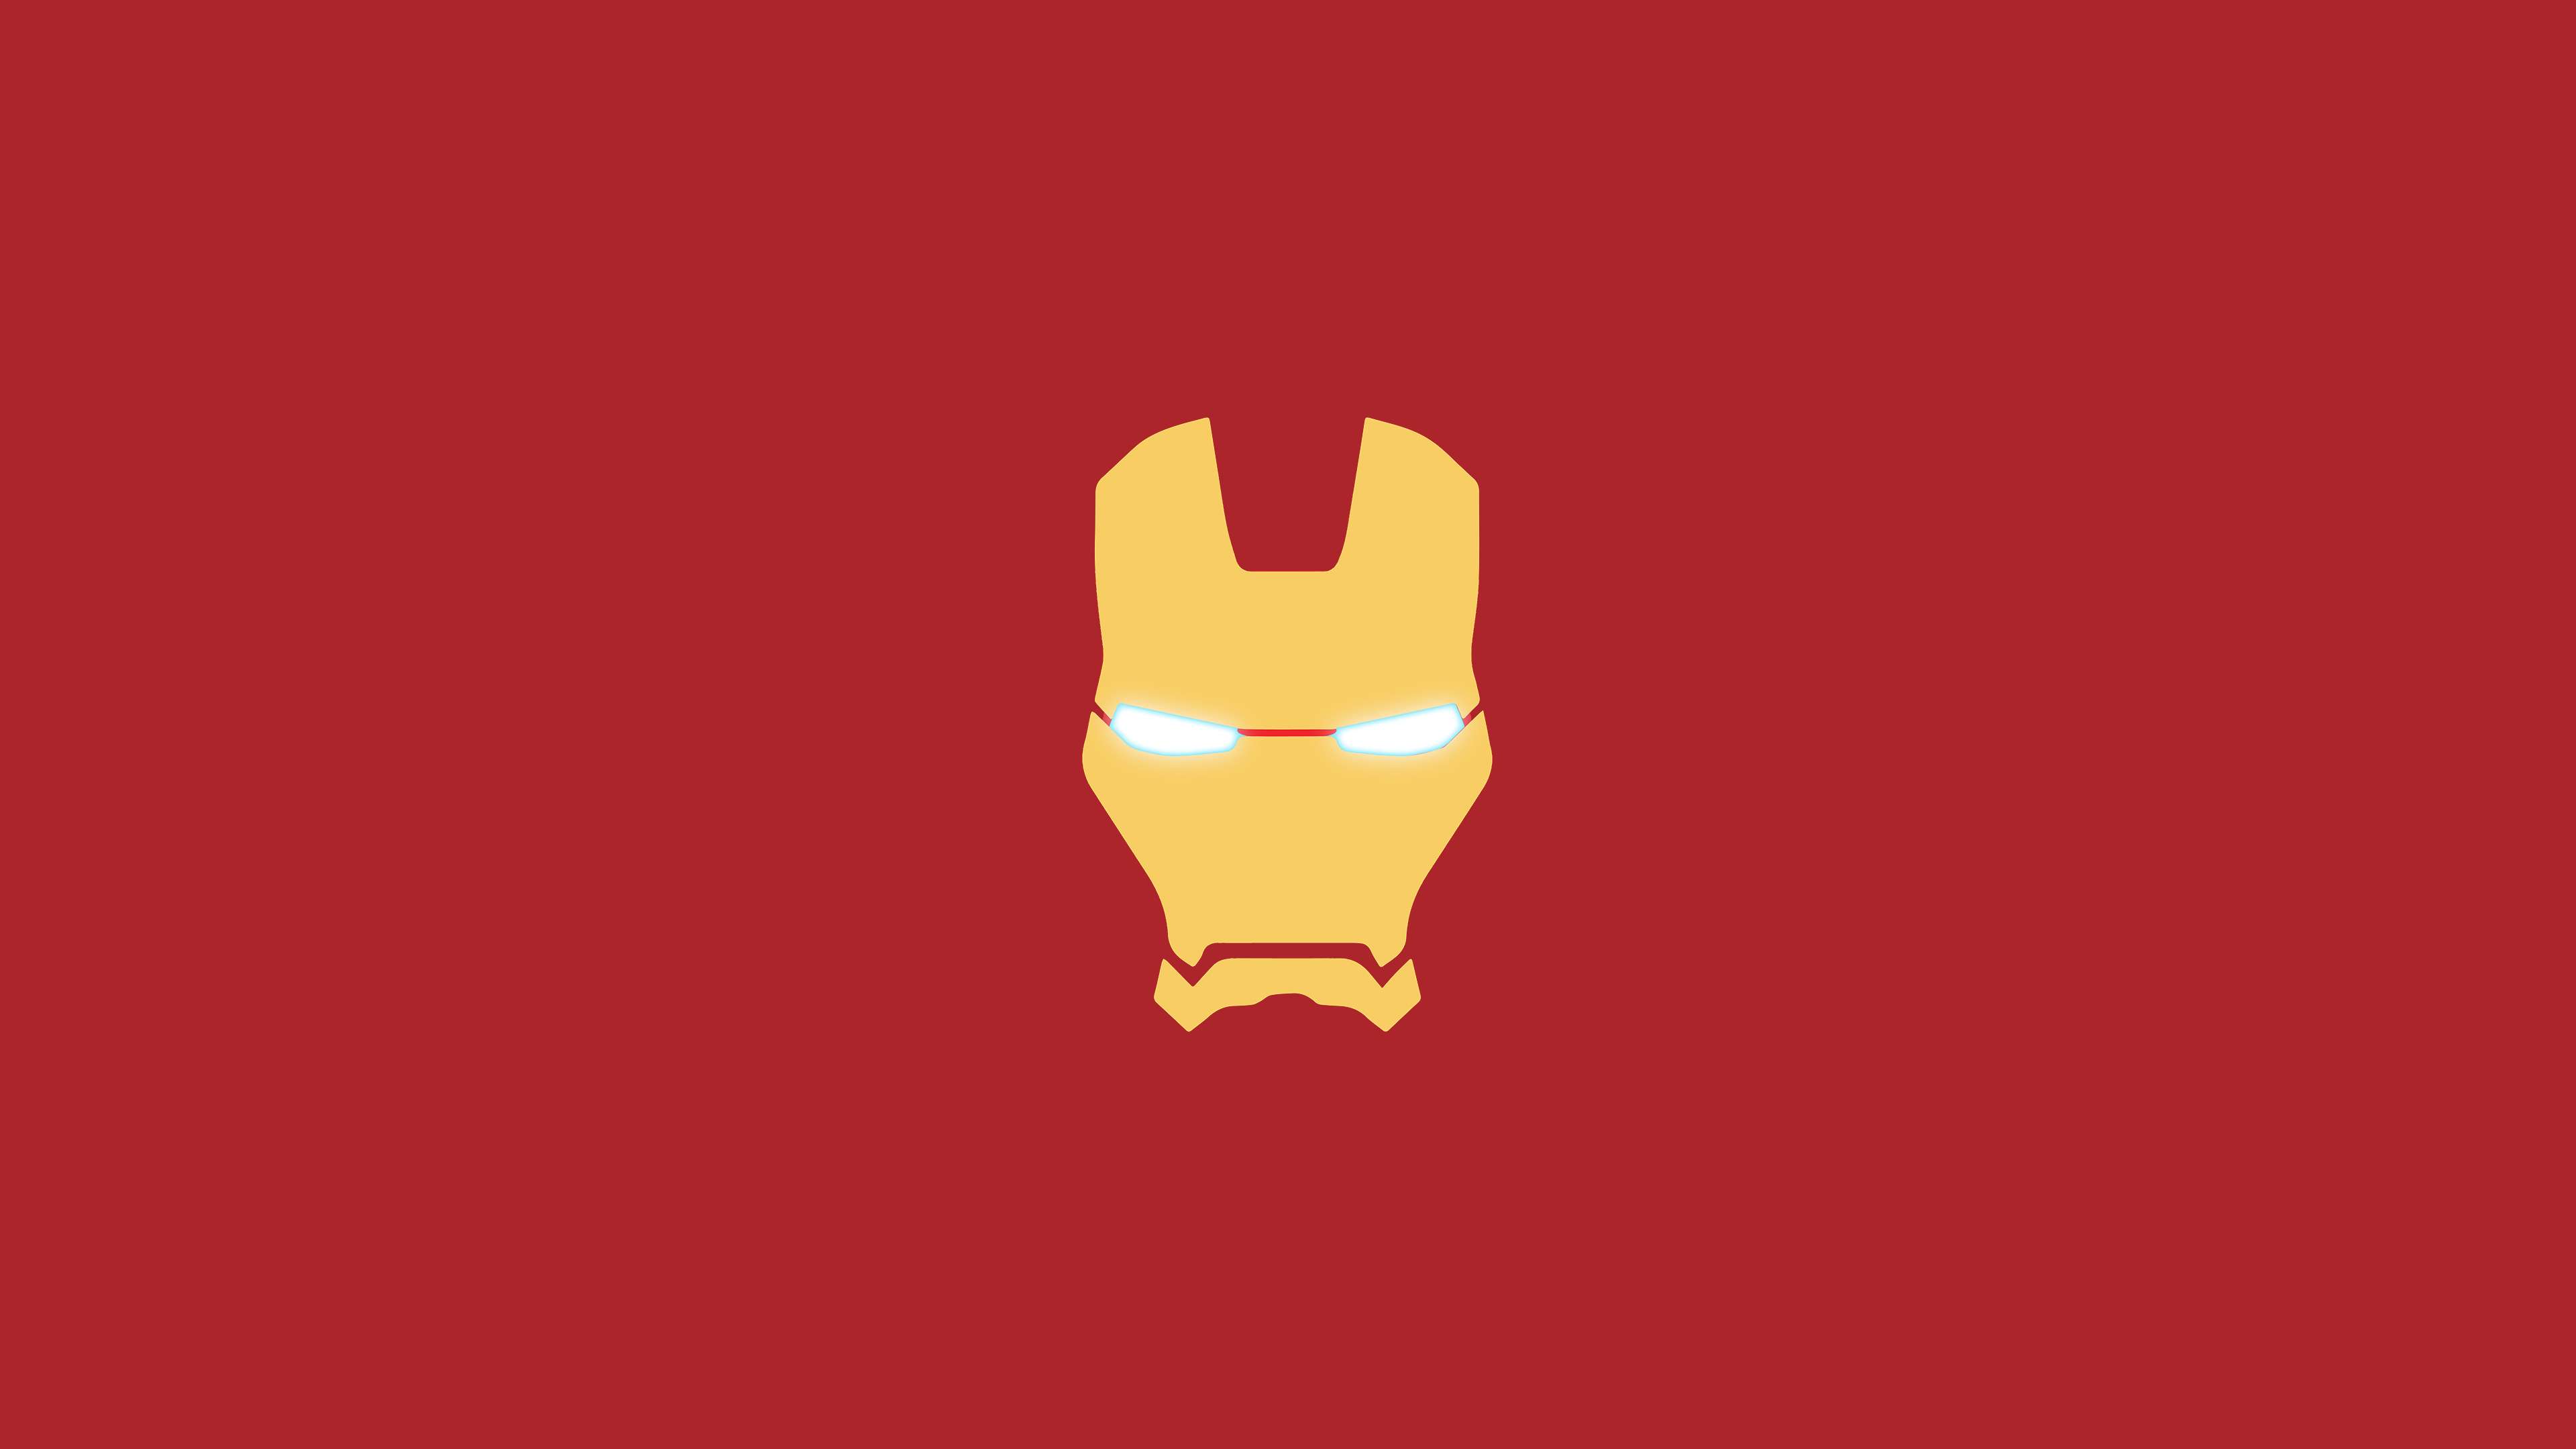 Wallpaper Iron Man Face Image